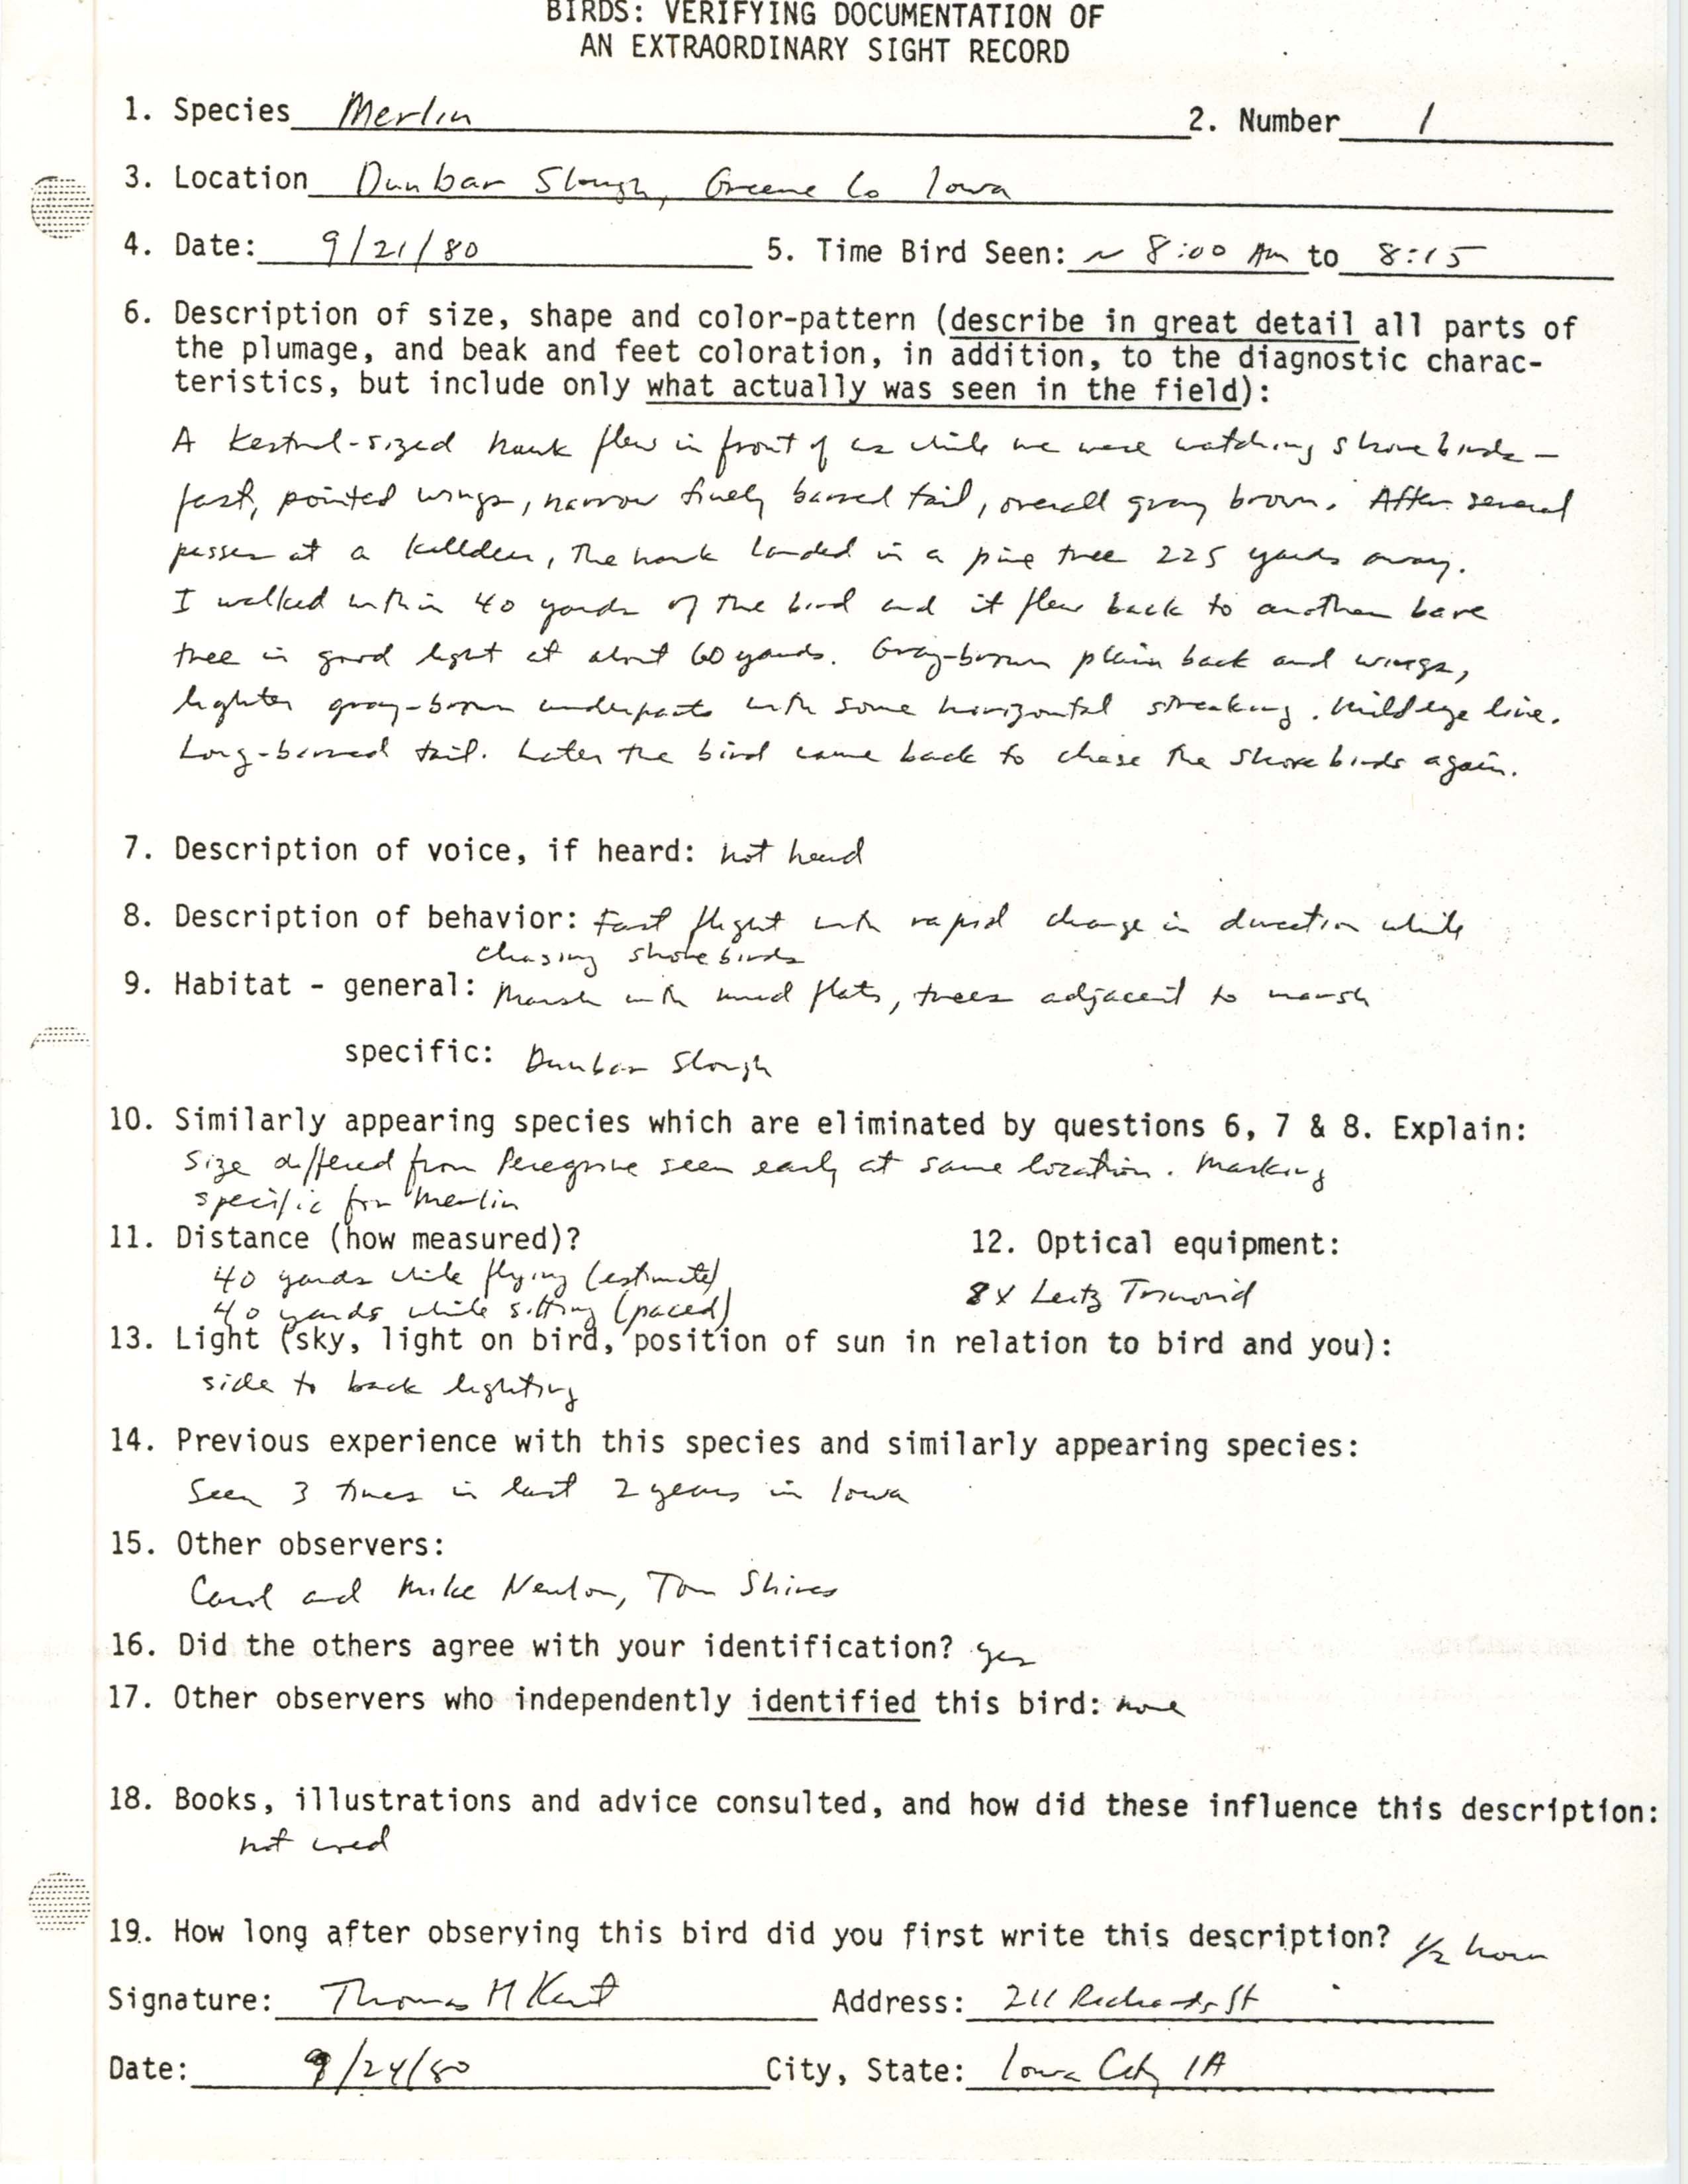 Rare bird documentation form for Merlin at Dunbar Slough, 1980